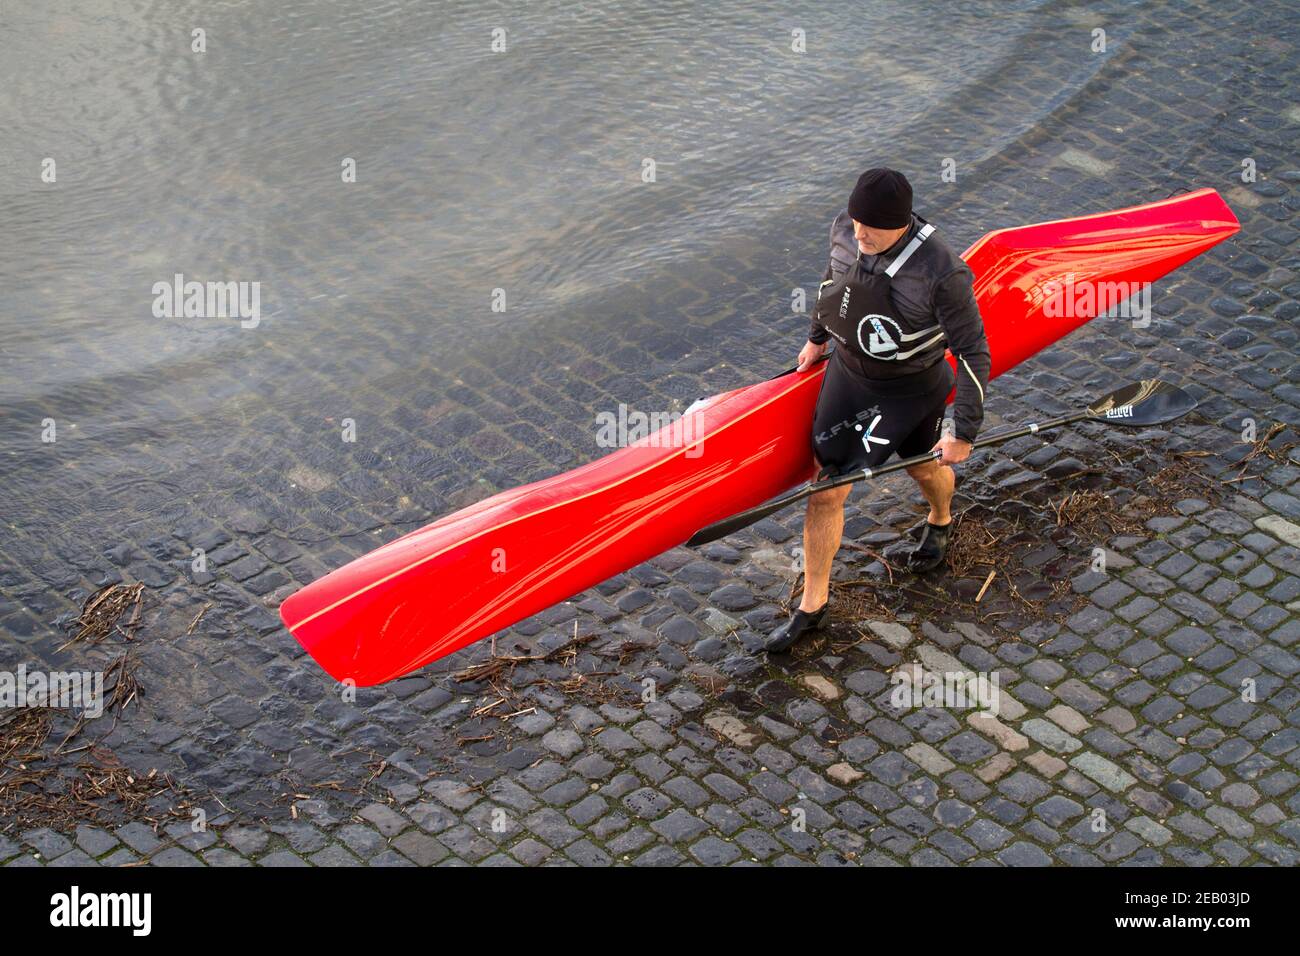 Homme transportant son kayak sur les rives du Rhin à Deutz, Cologne, Allemagne. Mann traegt sein Kajak ans Rheinufer in Deutz, Koeln, Deutschland. Banque D'Images